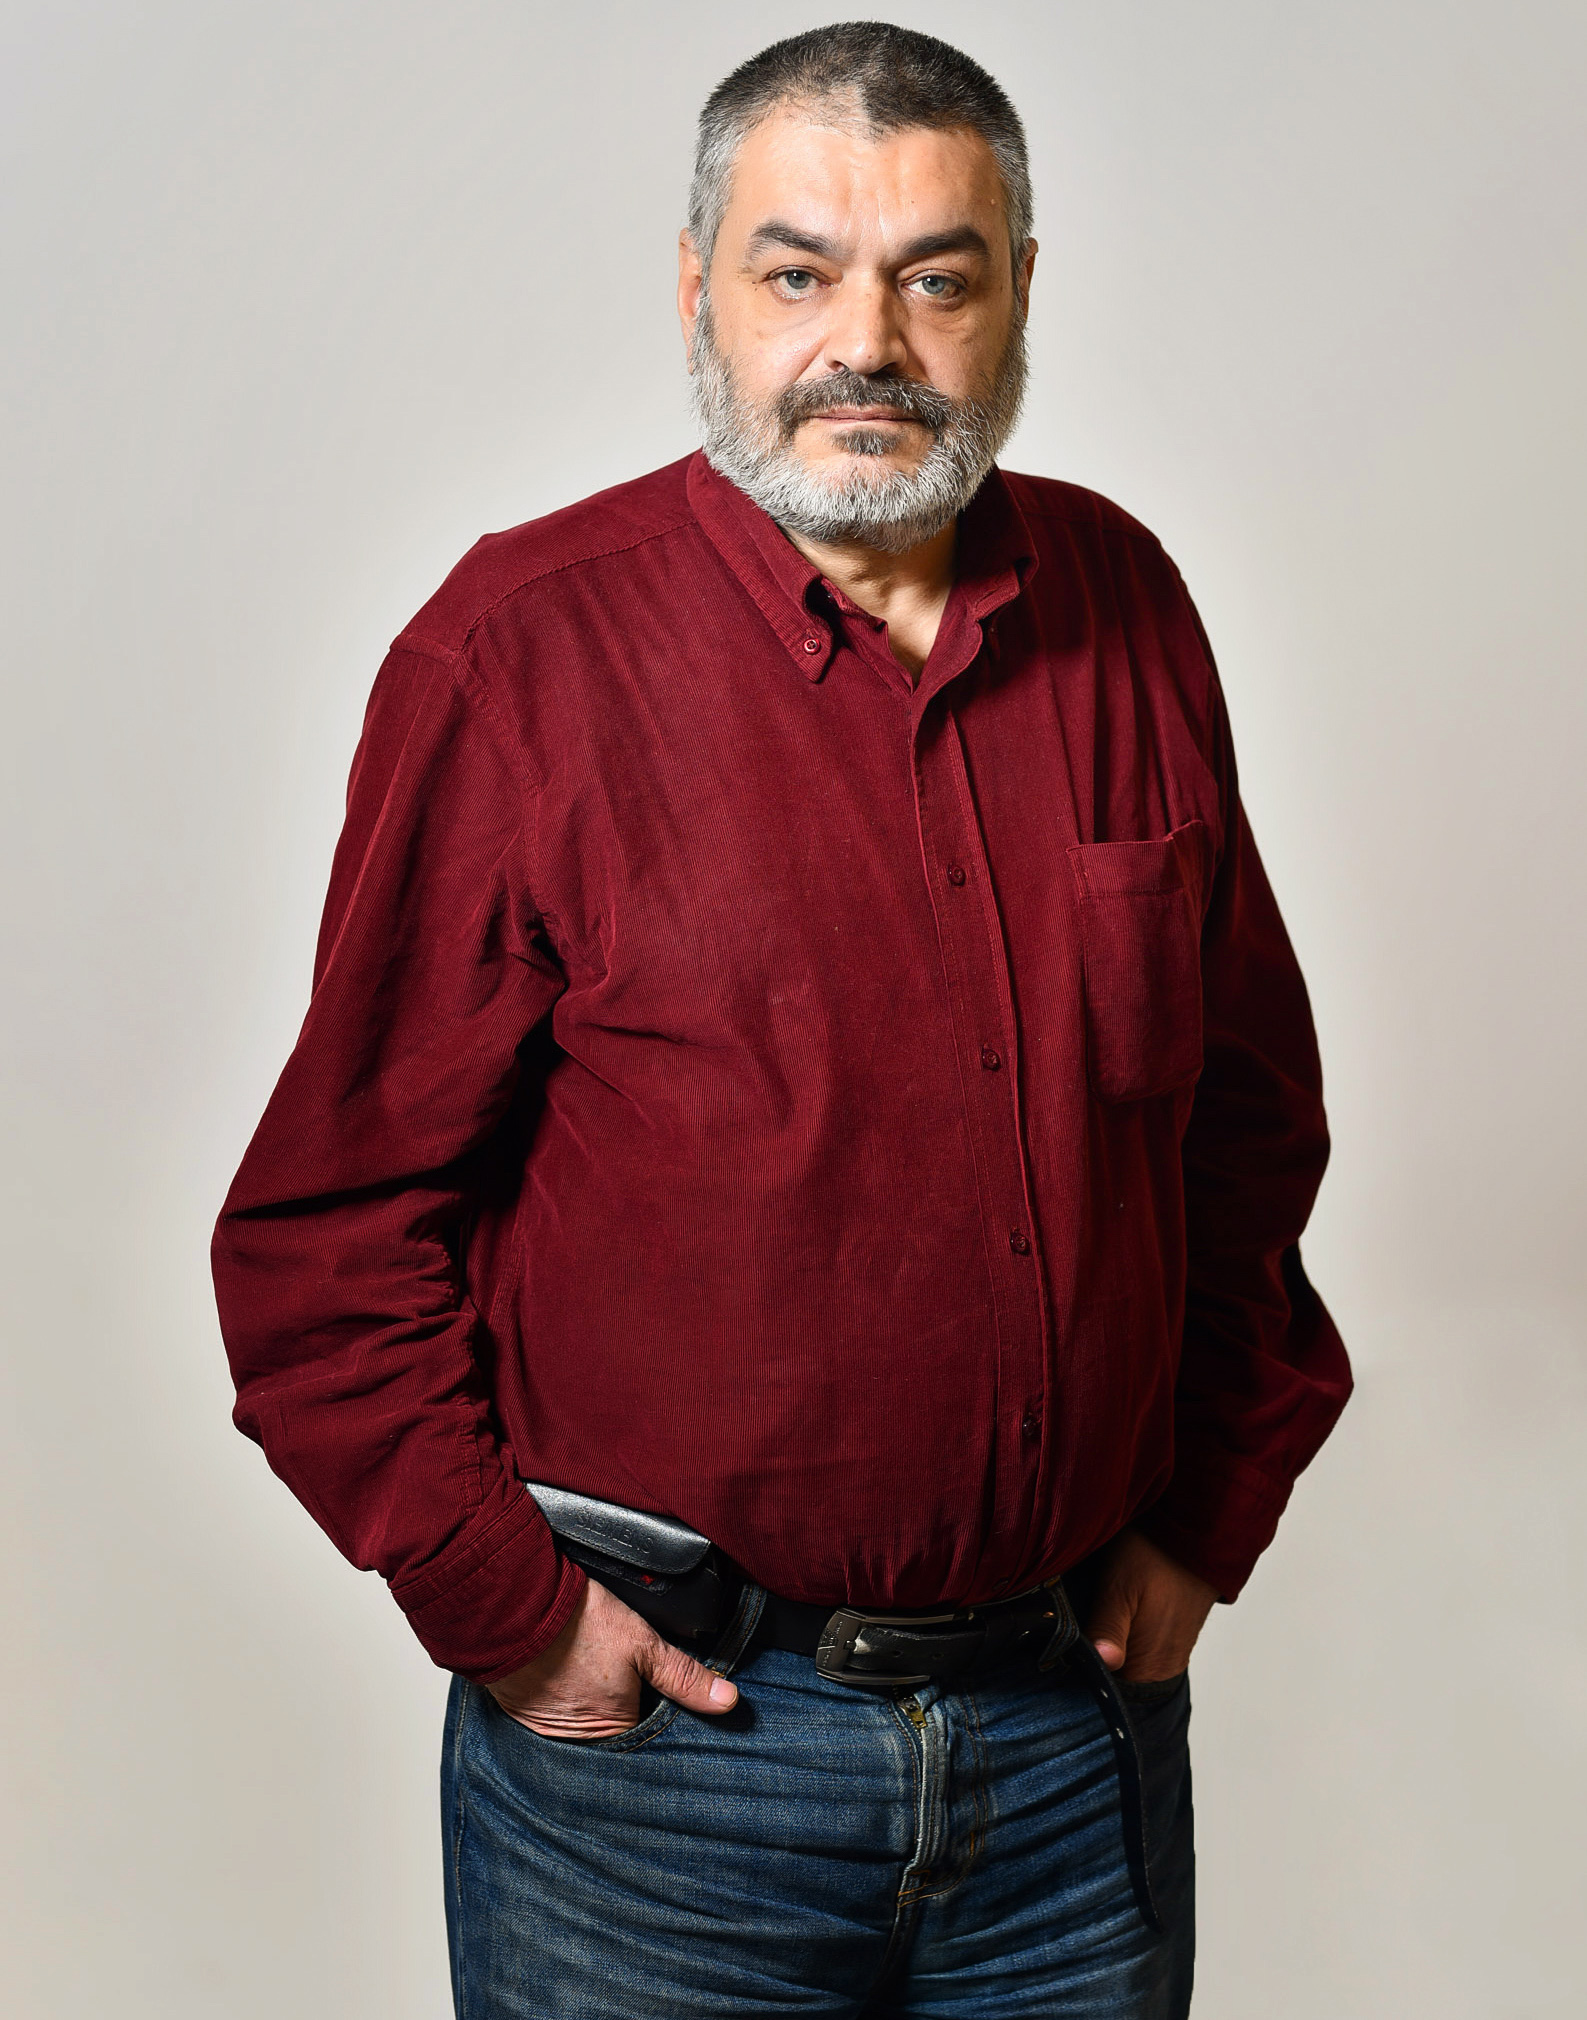 Giorgi Nizharadze